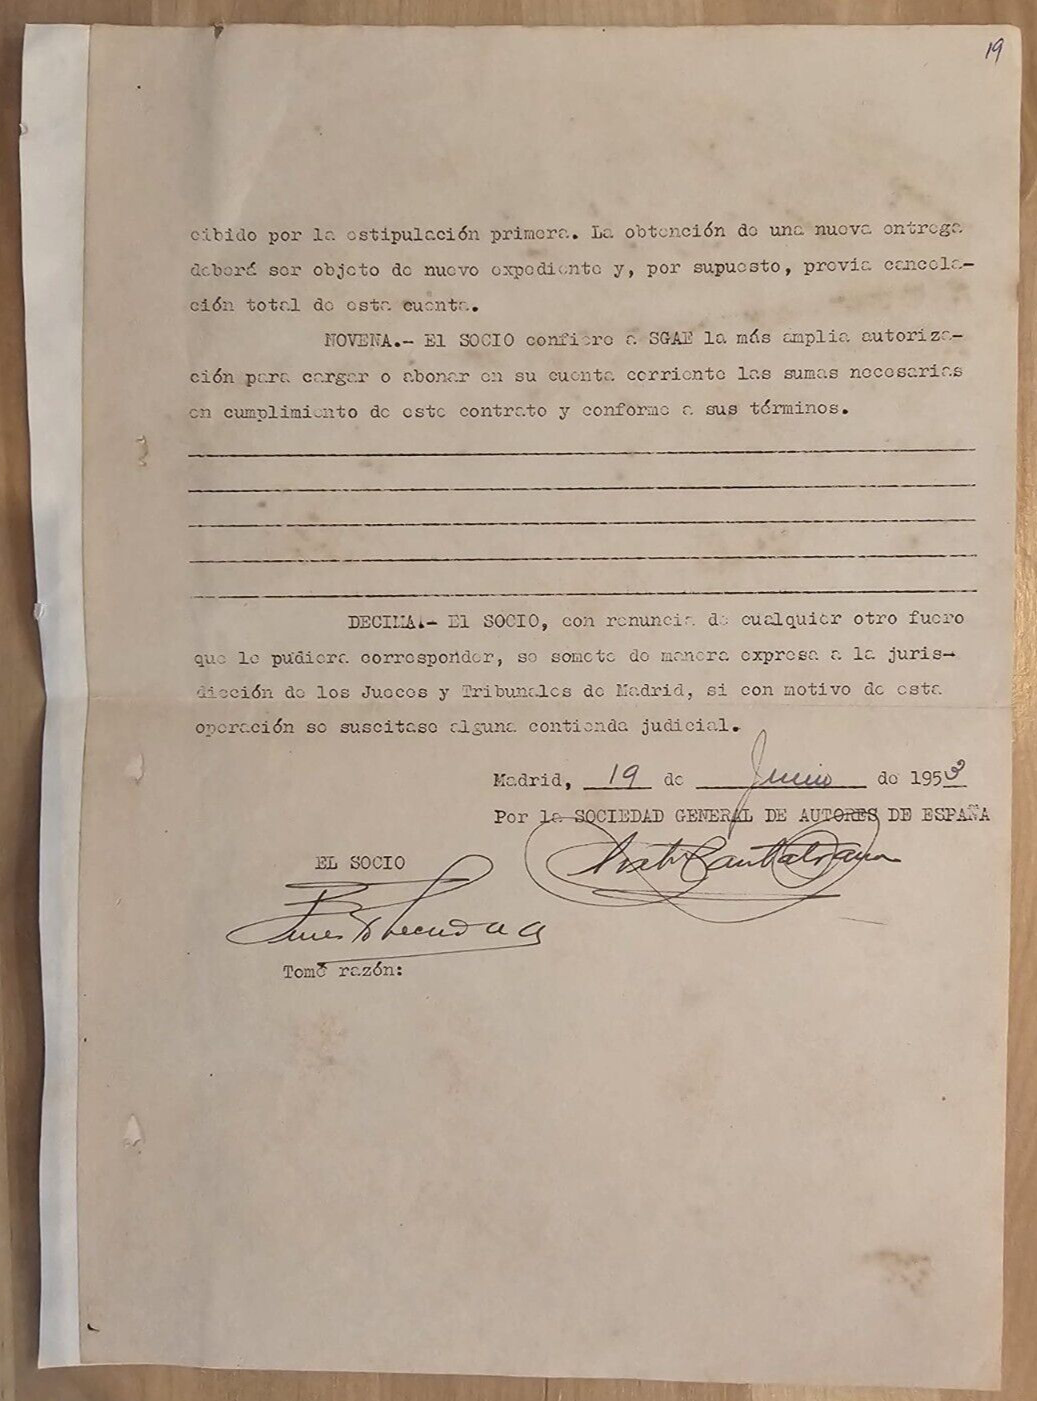 RARE COMPOSER ERNESTO LECUONA SIGNED AUTOGRAPH AUTOGRAPHED 1953